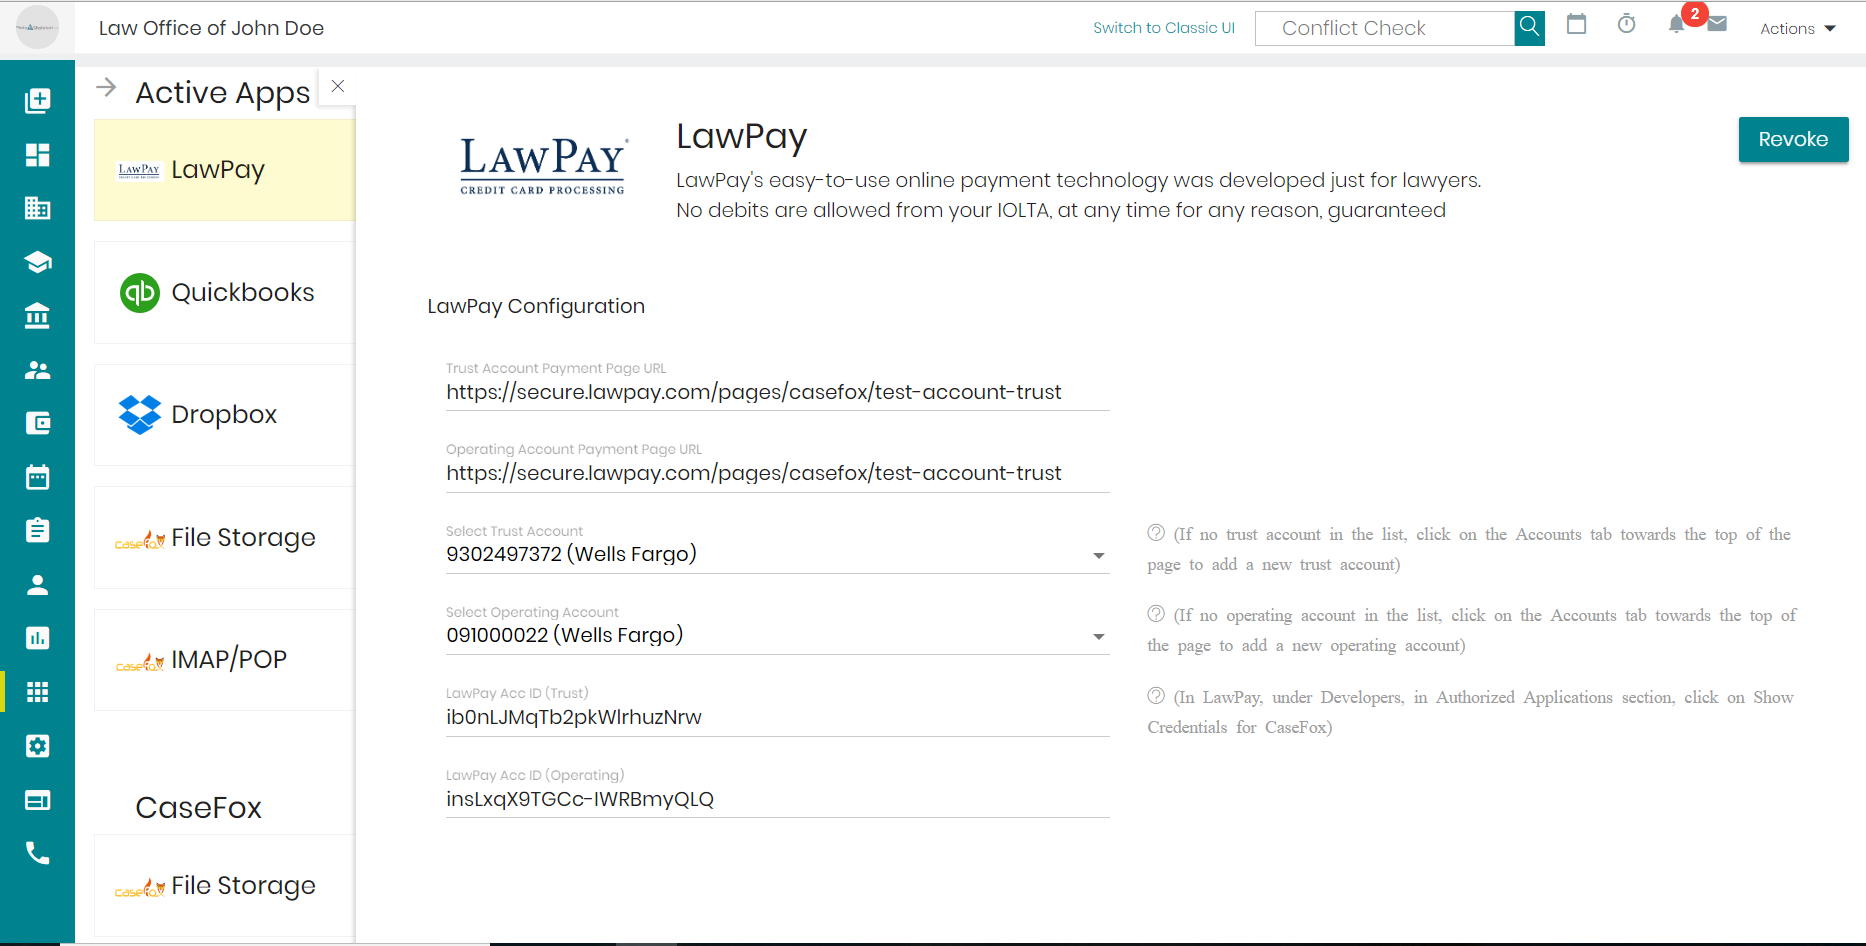 lawPay integration